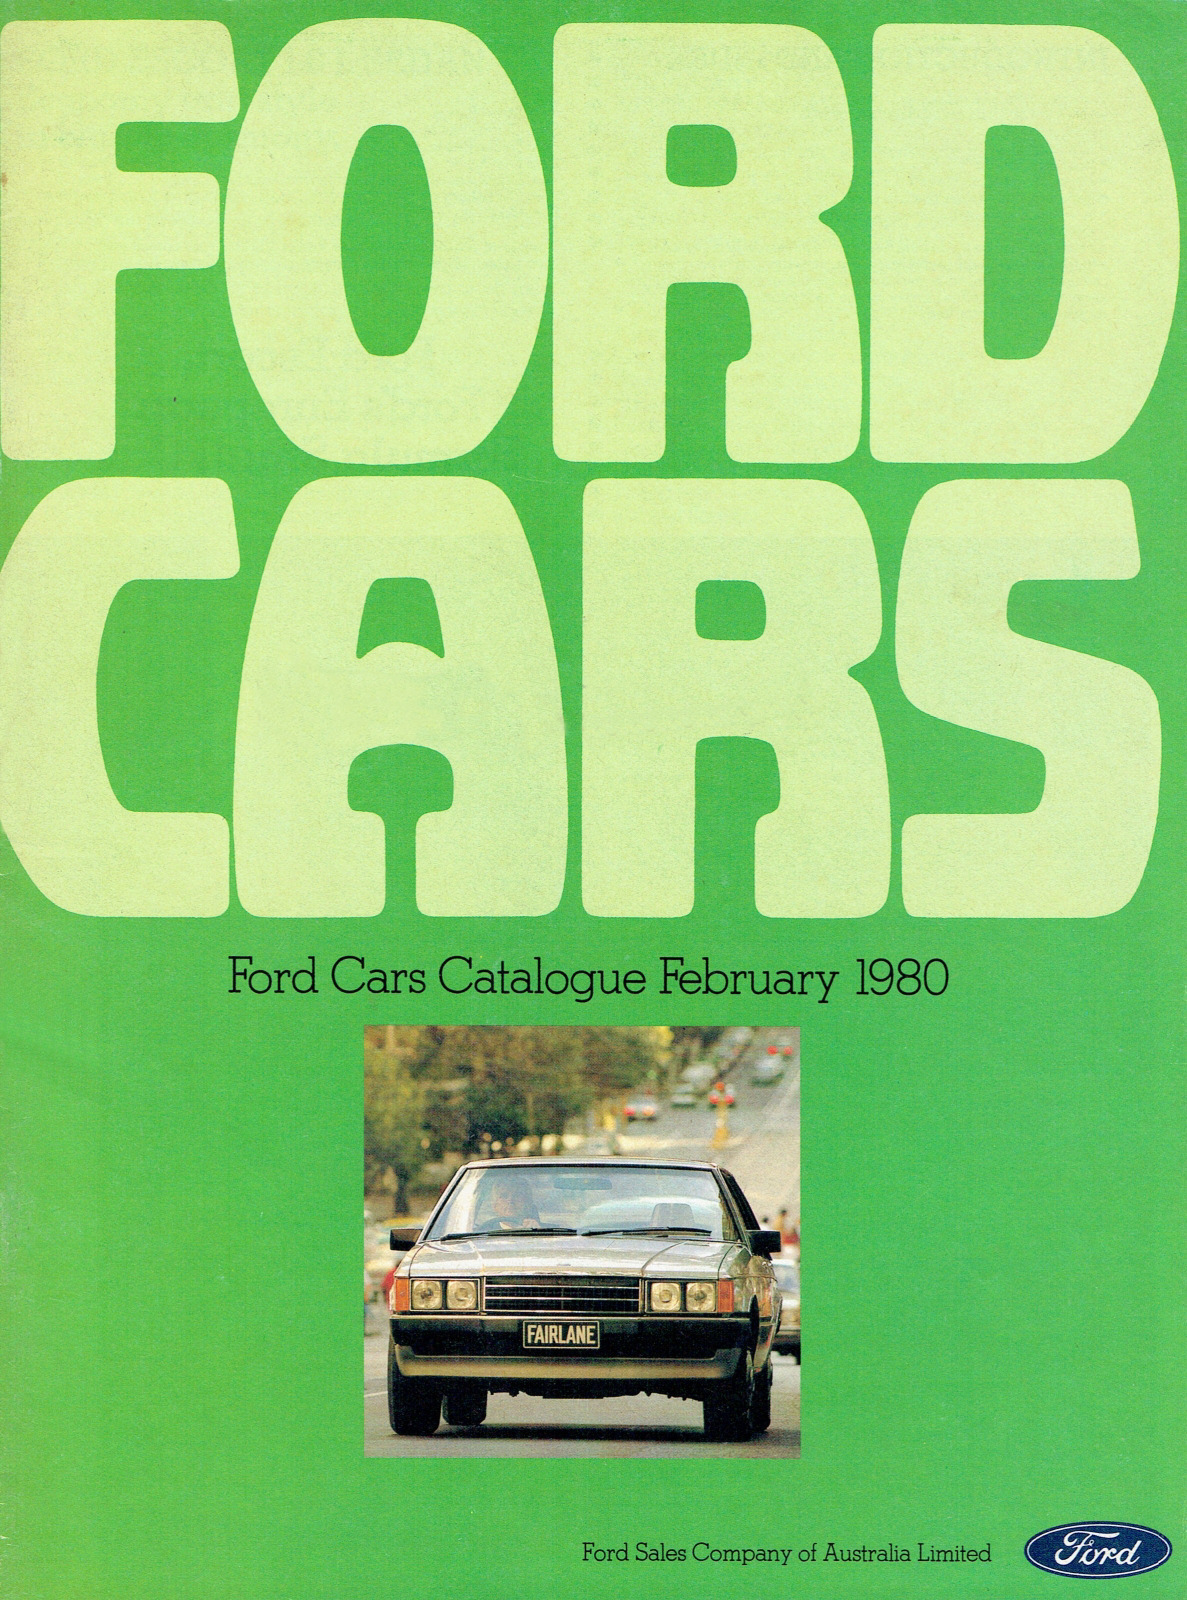 n_1980 Ford Cars Catalogue-01.jpg